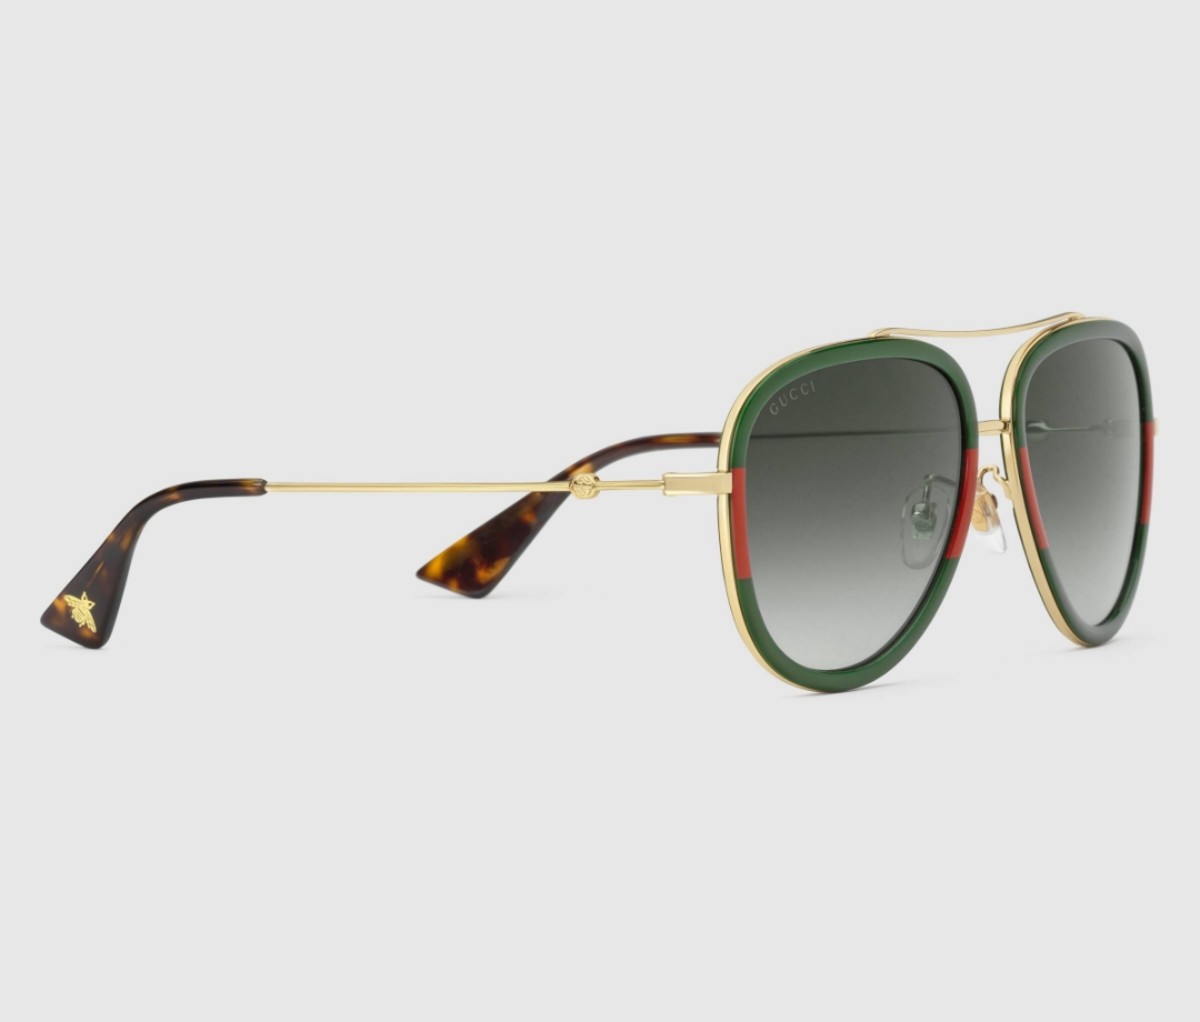 Gucci Aviator Metal Sunglasses aviator sunglasses for men